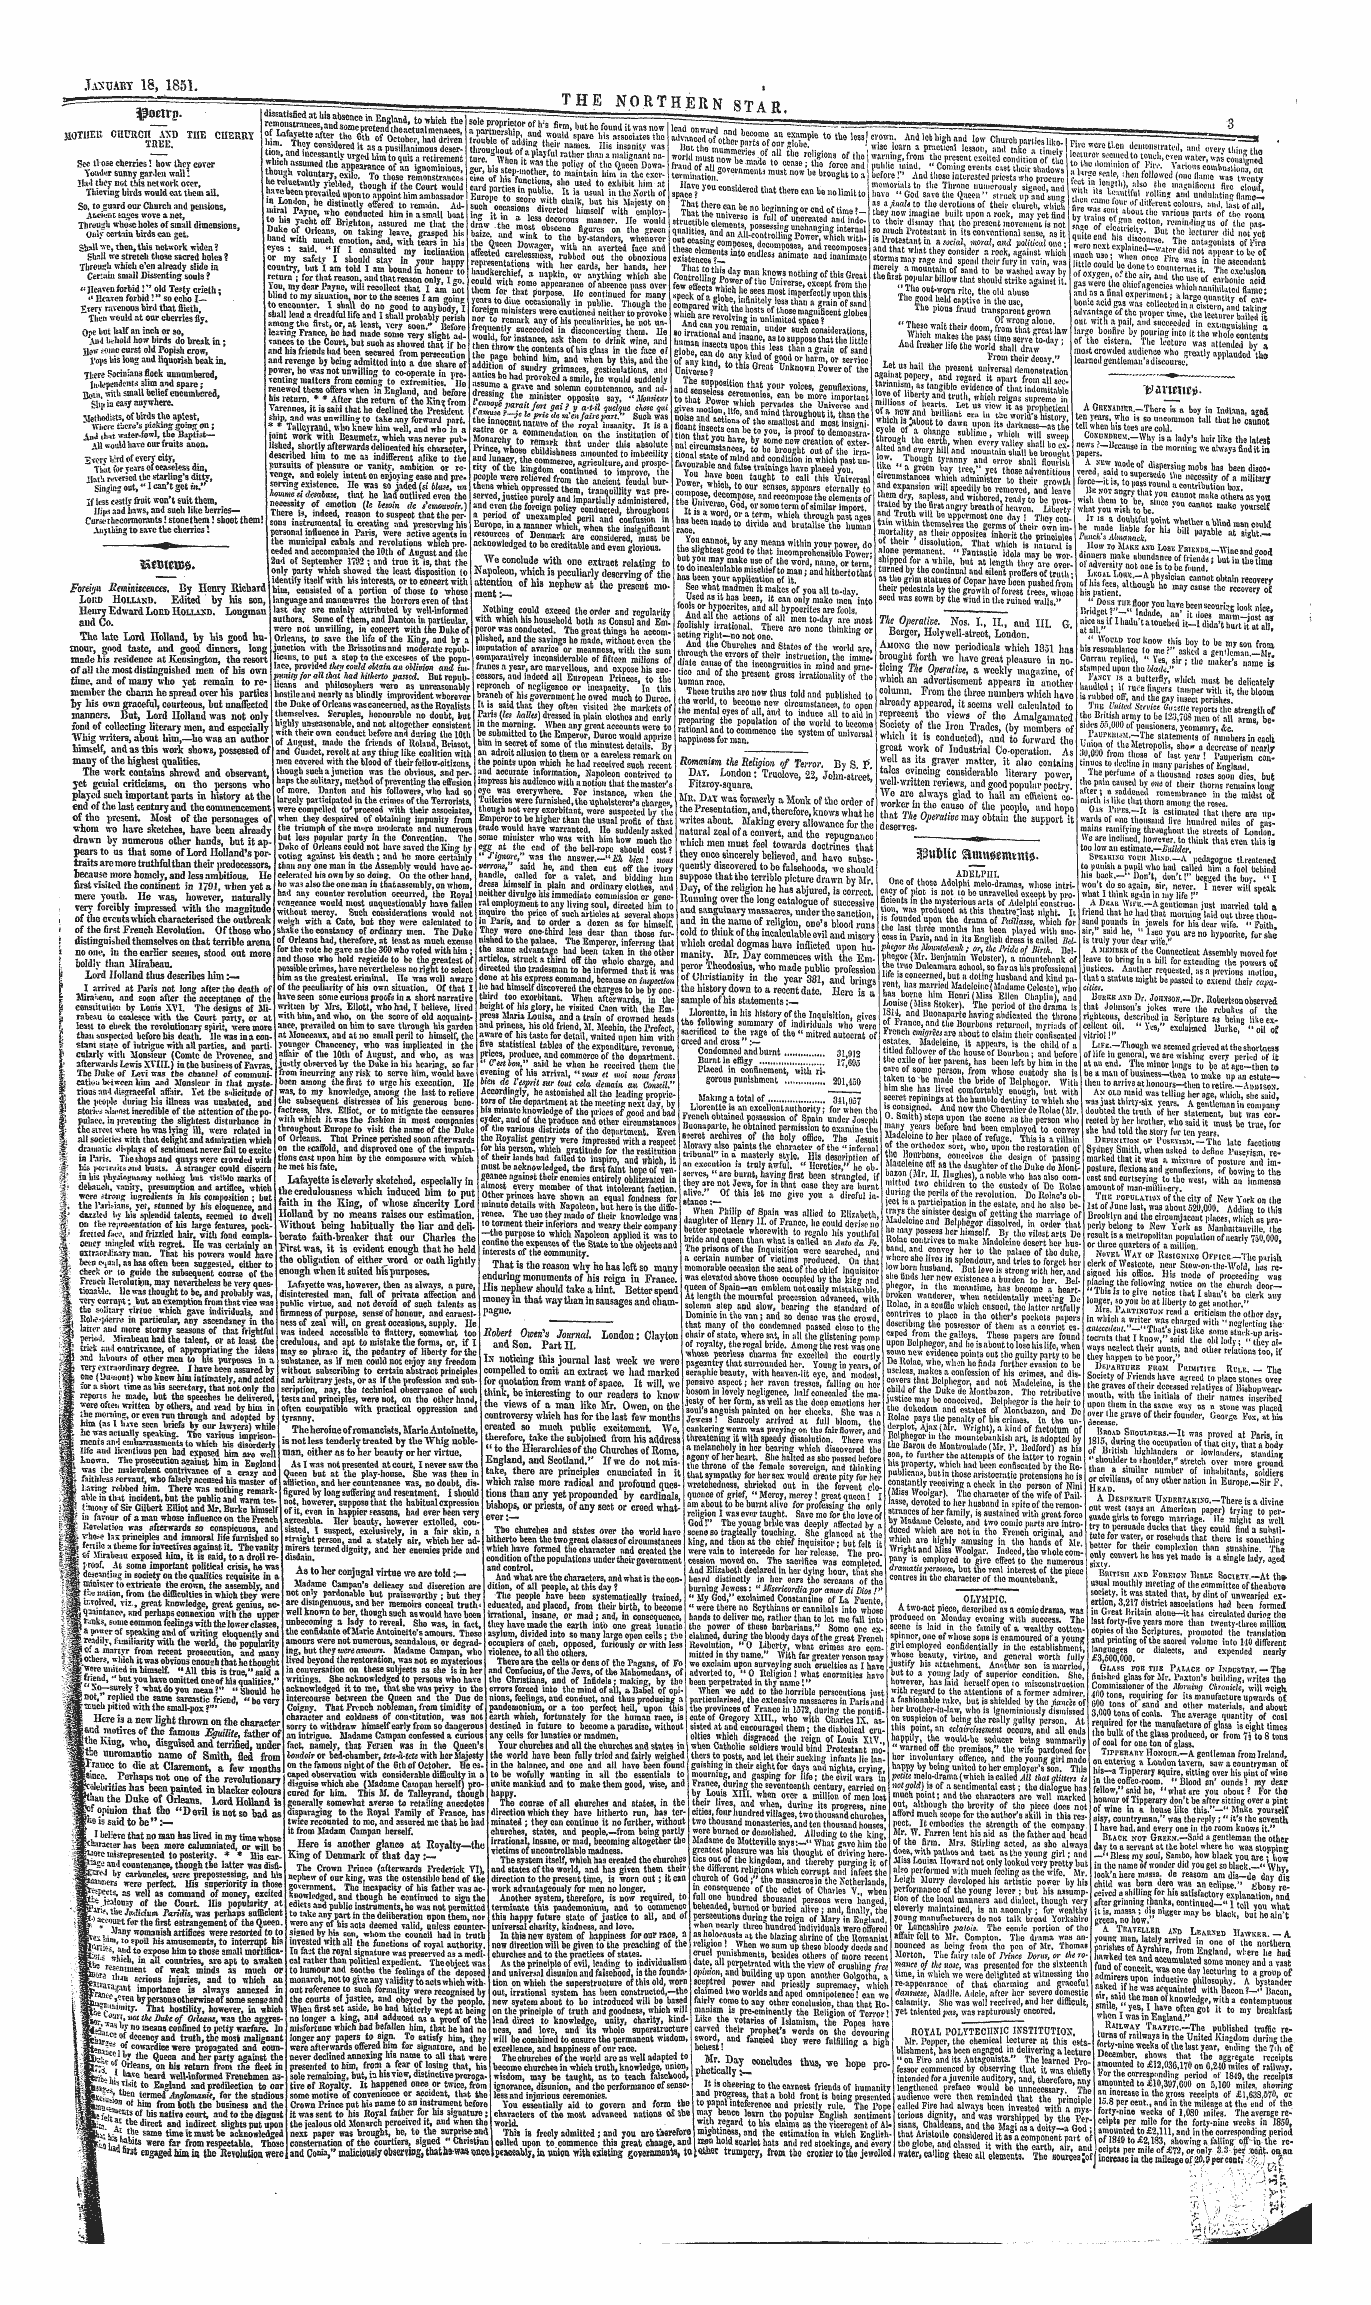 Northern Star (1837-1852): jS F Y, 1st edition - —^^M.